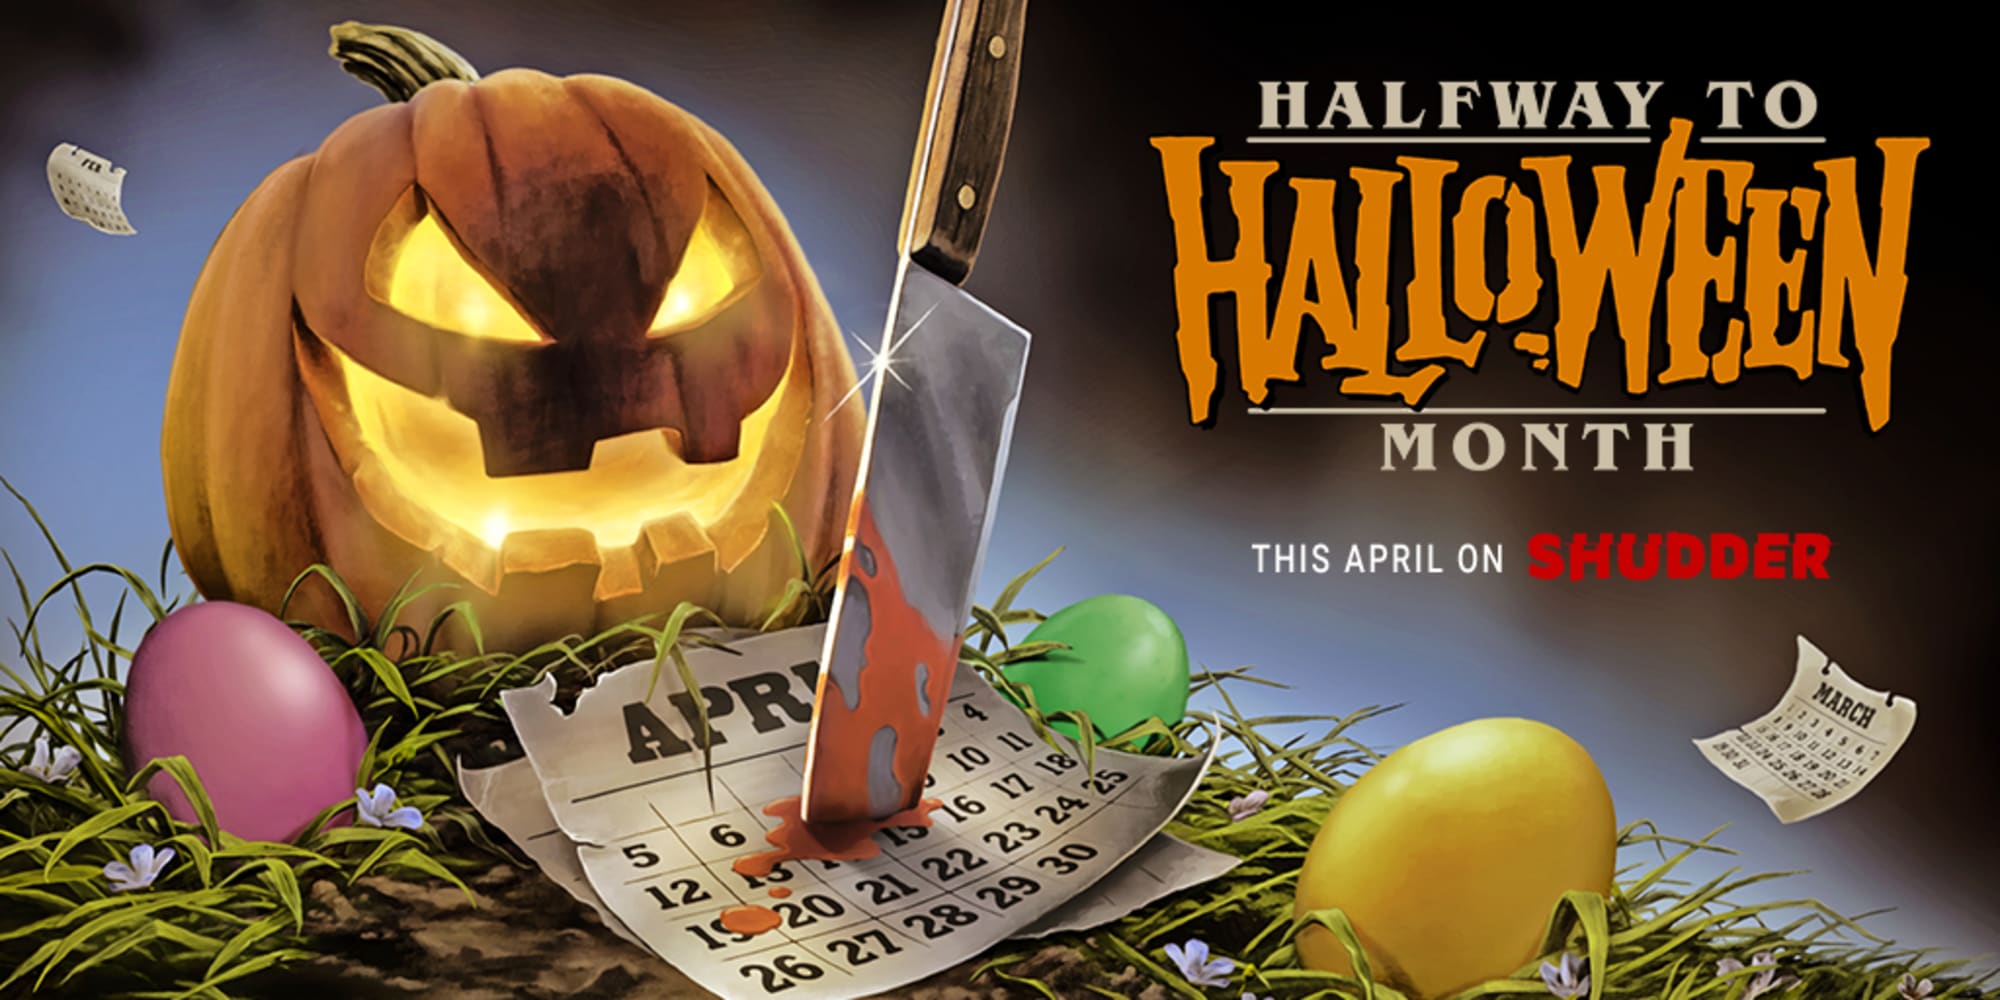 Shudder celebrates the halfway point to Halloween this April